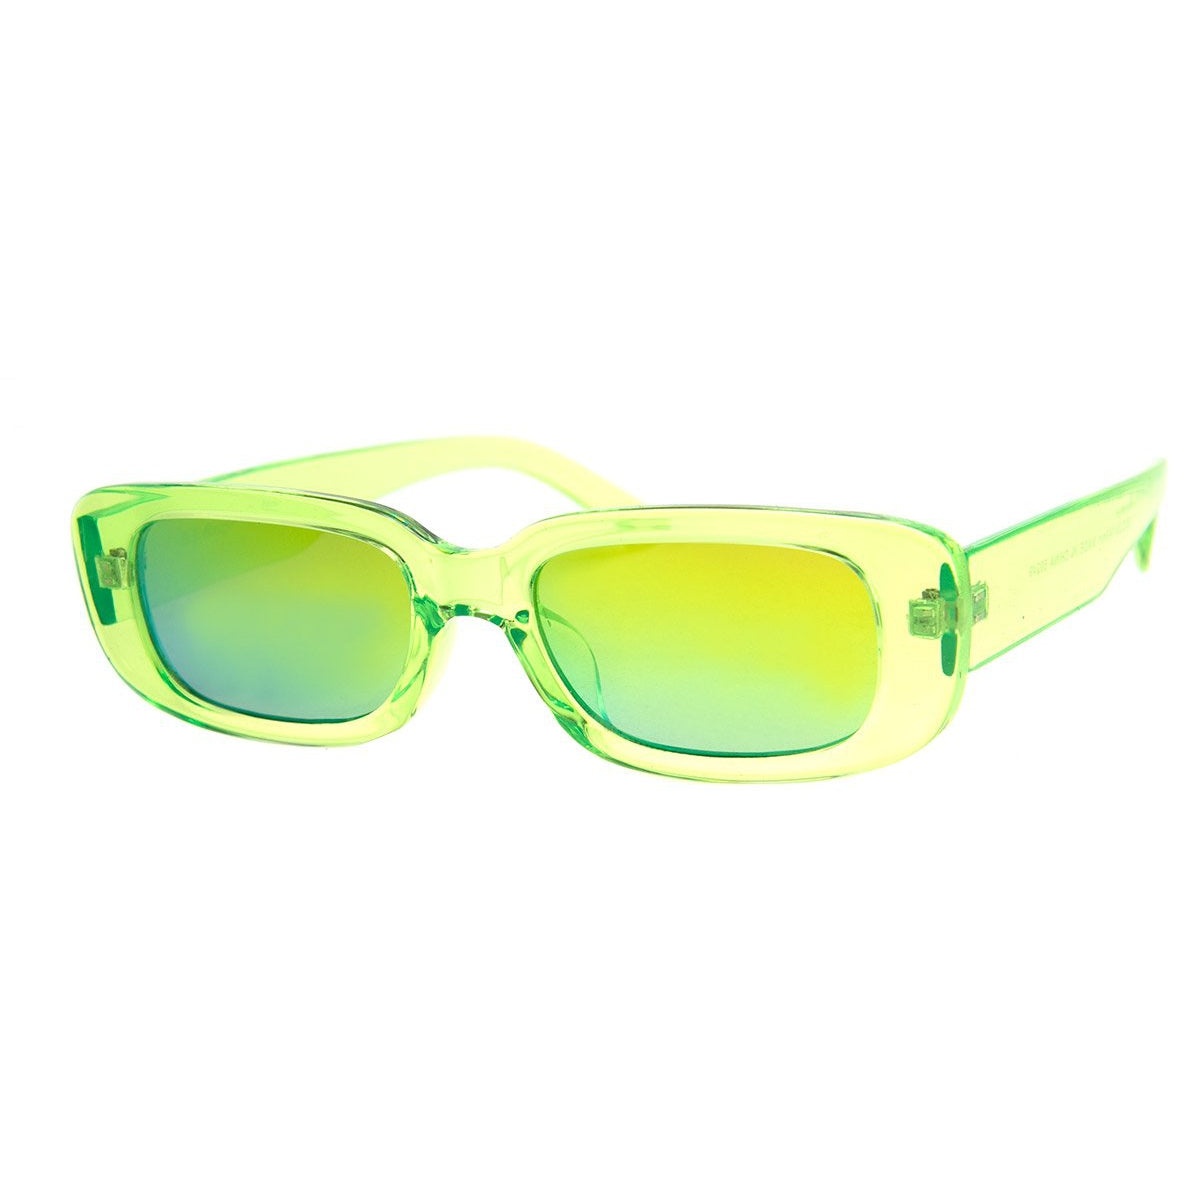 Callie Sunglasses - Lime Green